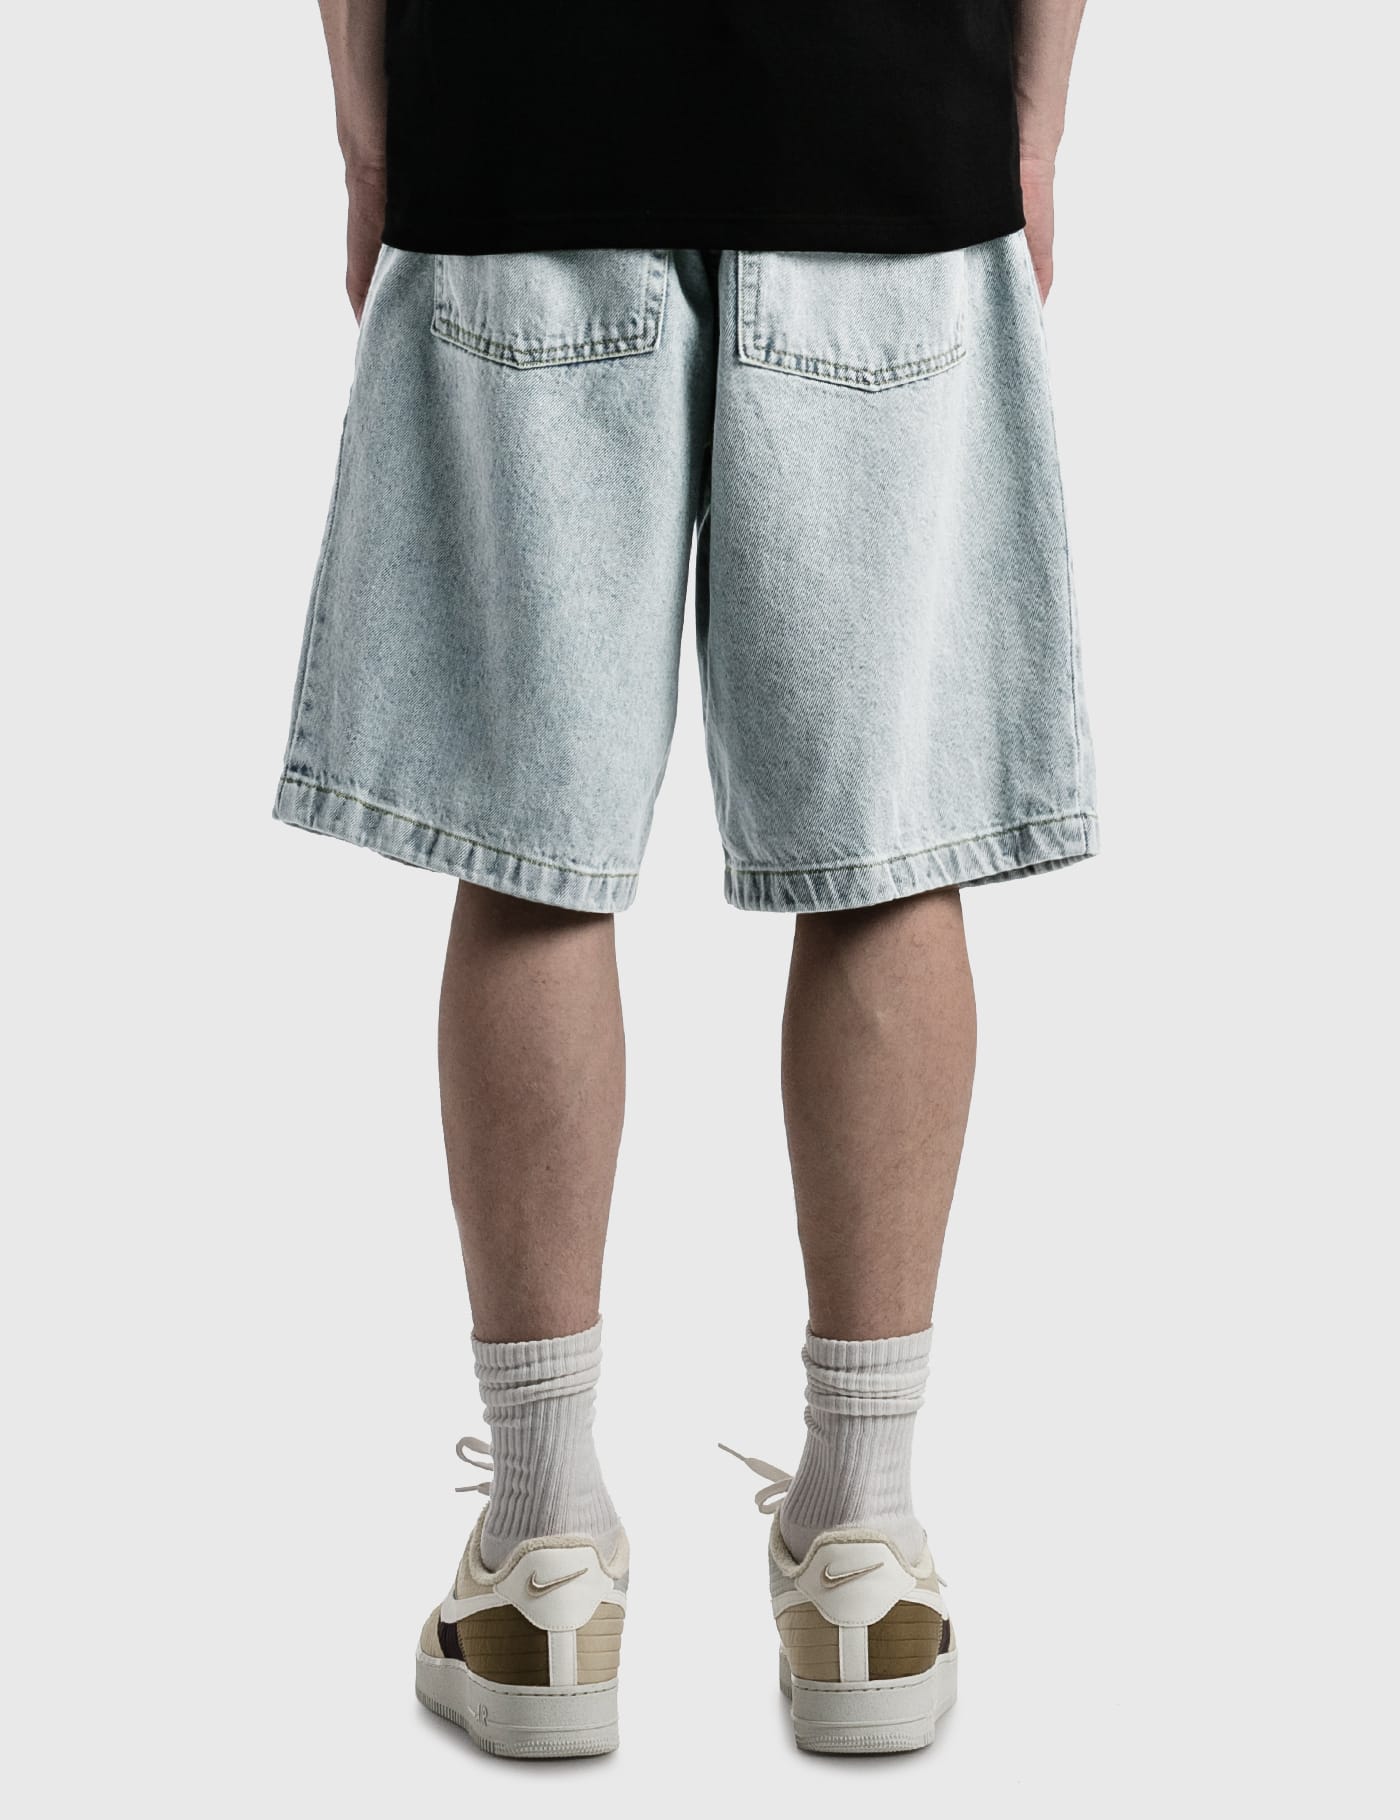 Polar Skate Co. - Big Boy Shorts | HBX - Globally Curated Fashion 